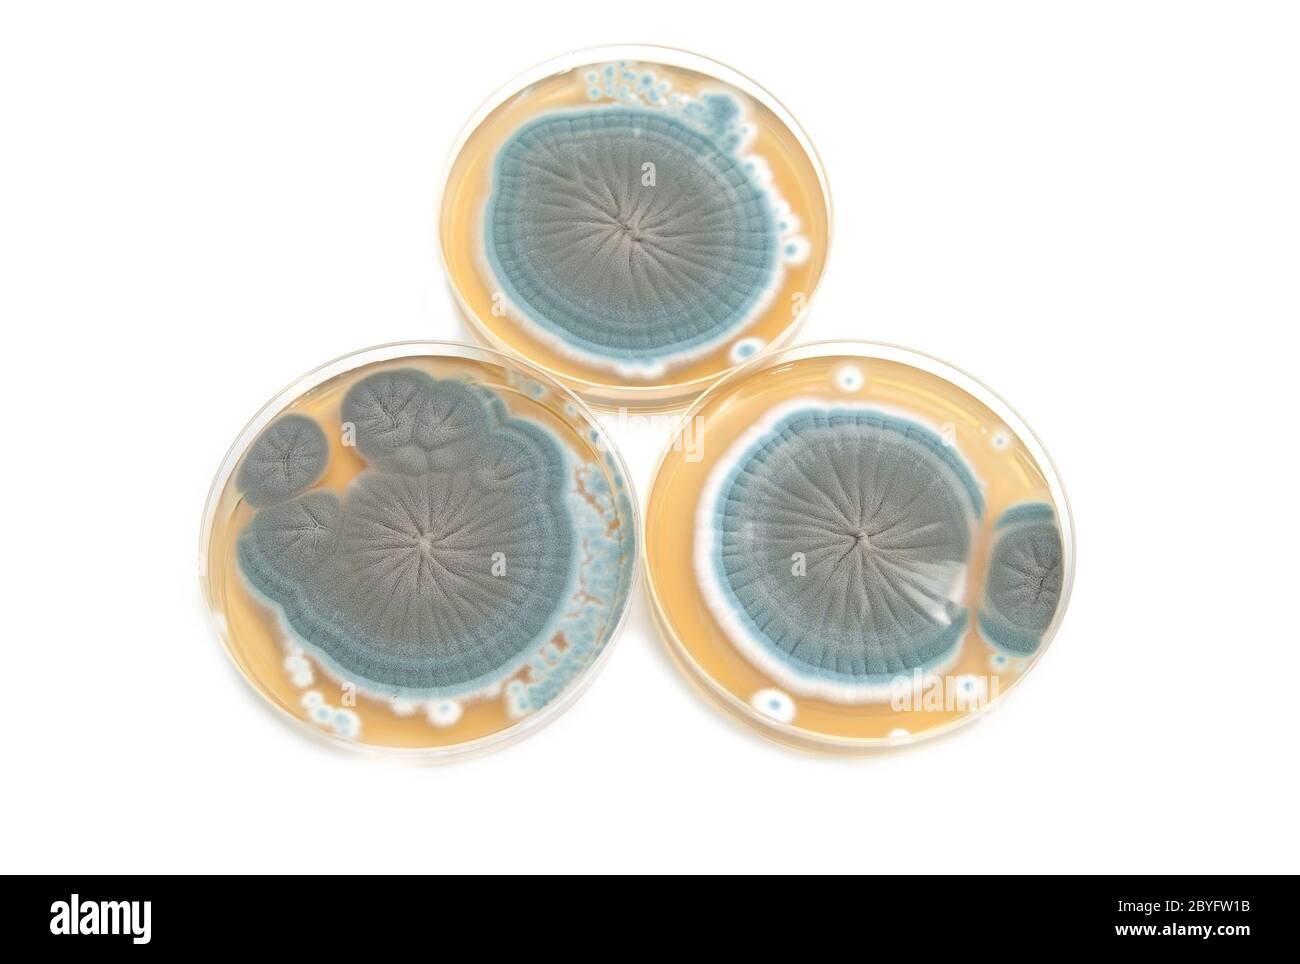 Penicillium fungi on agar plates over white Stock Photo